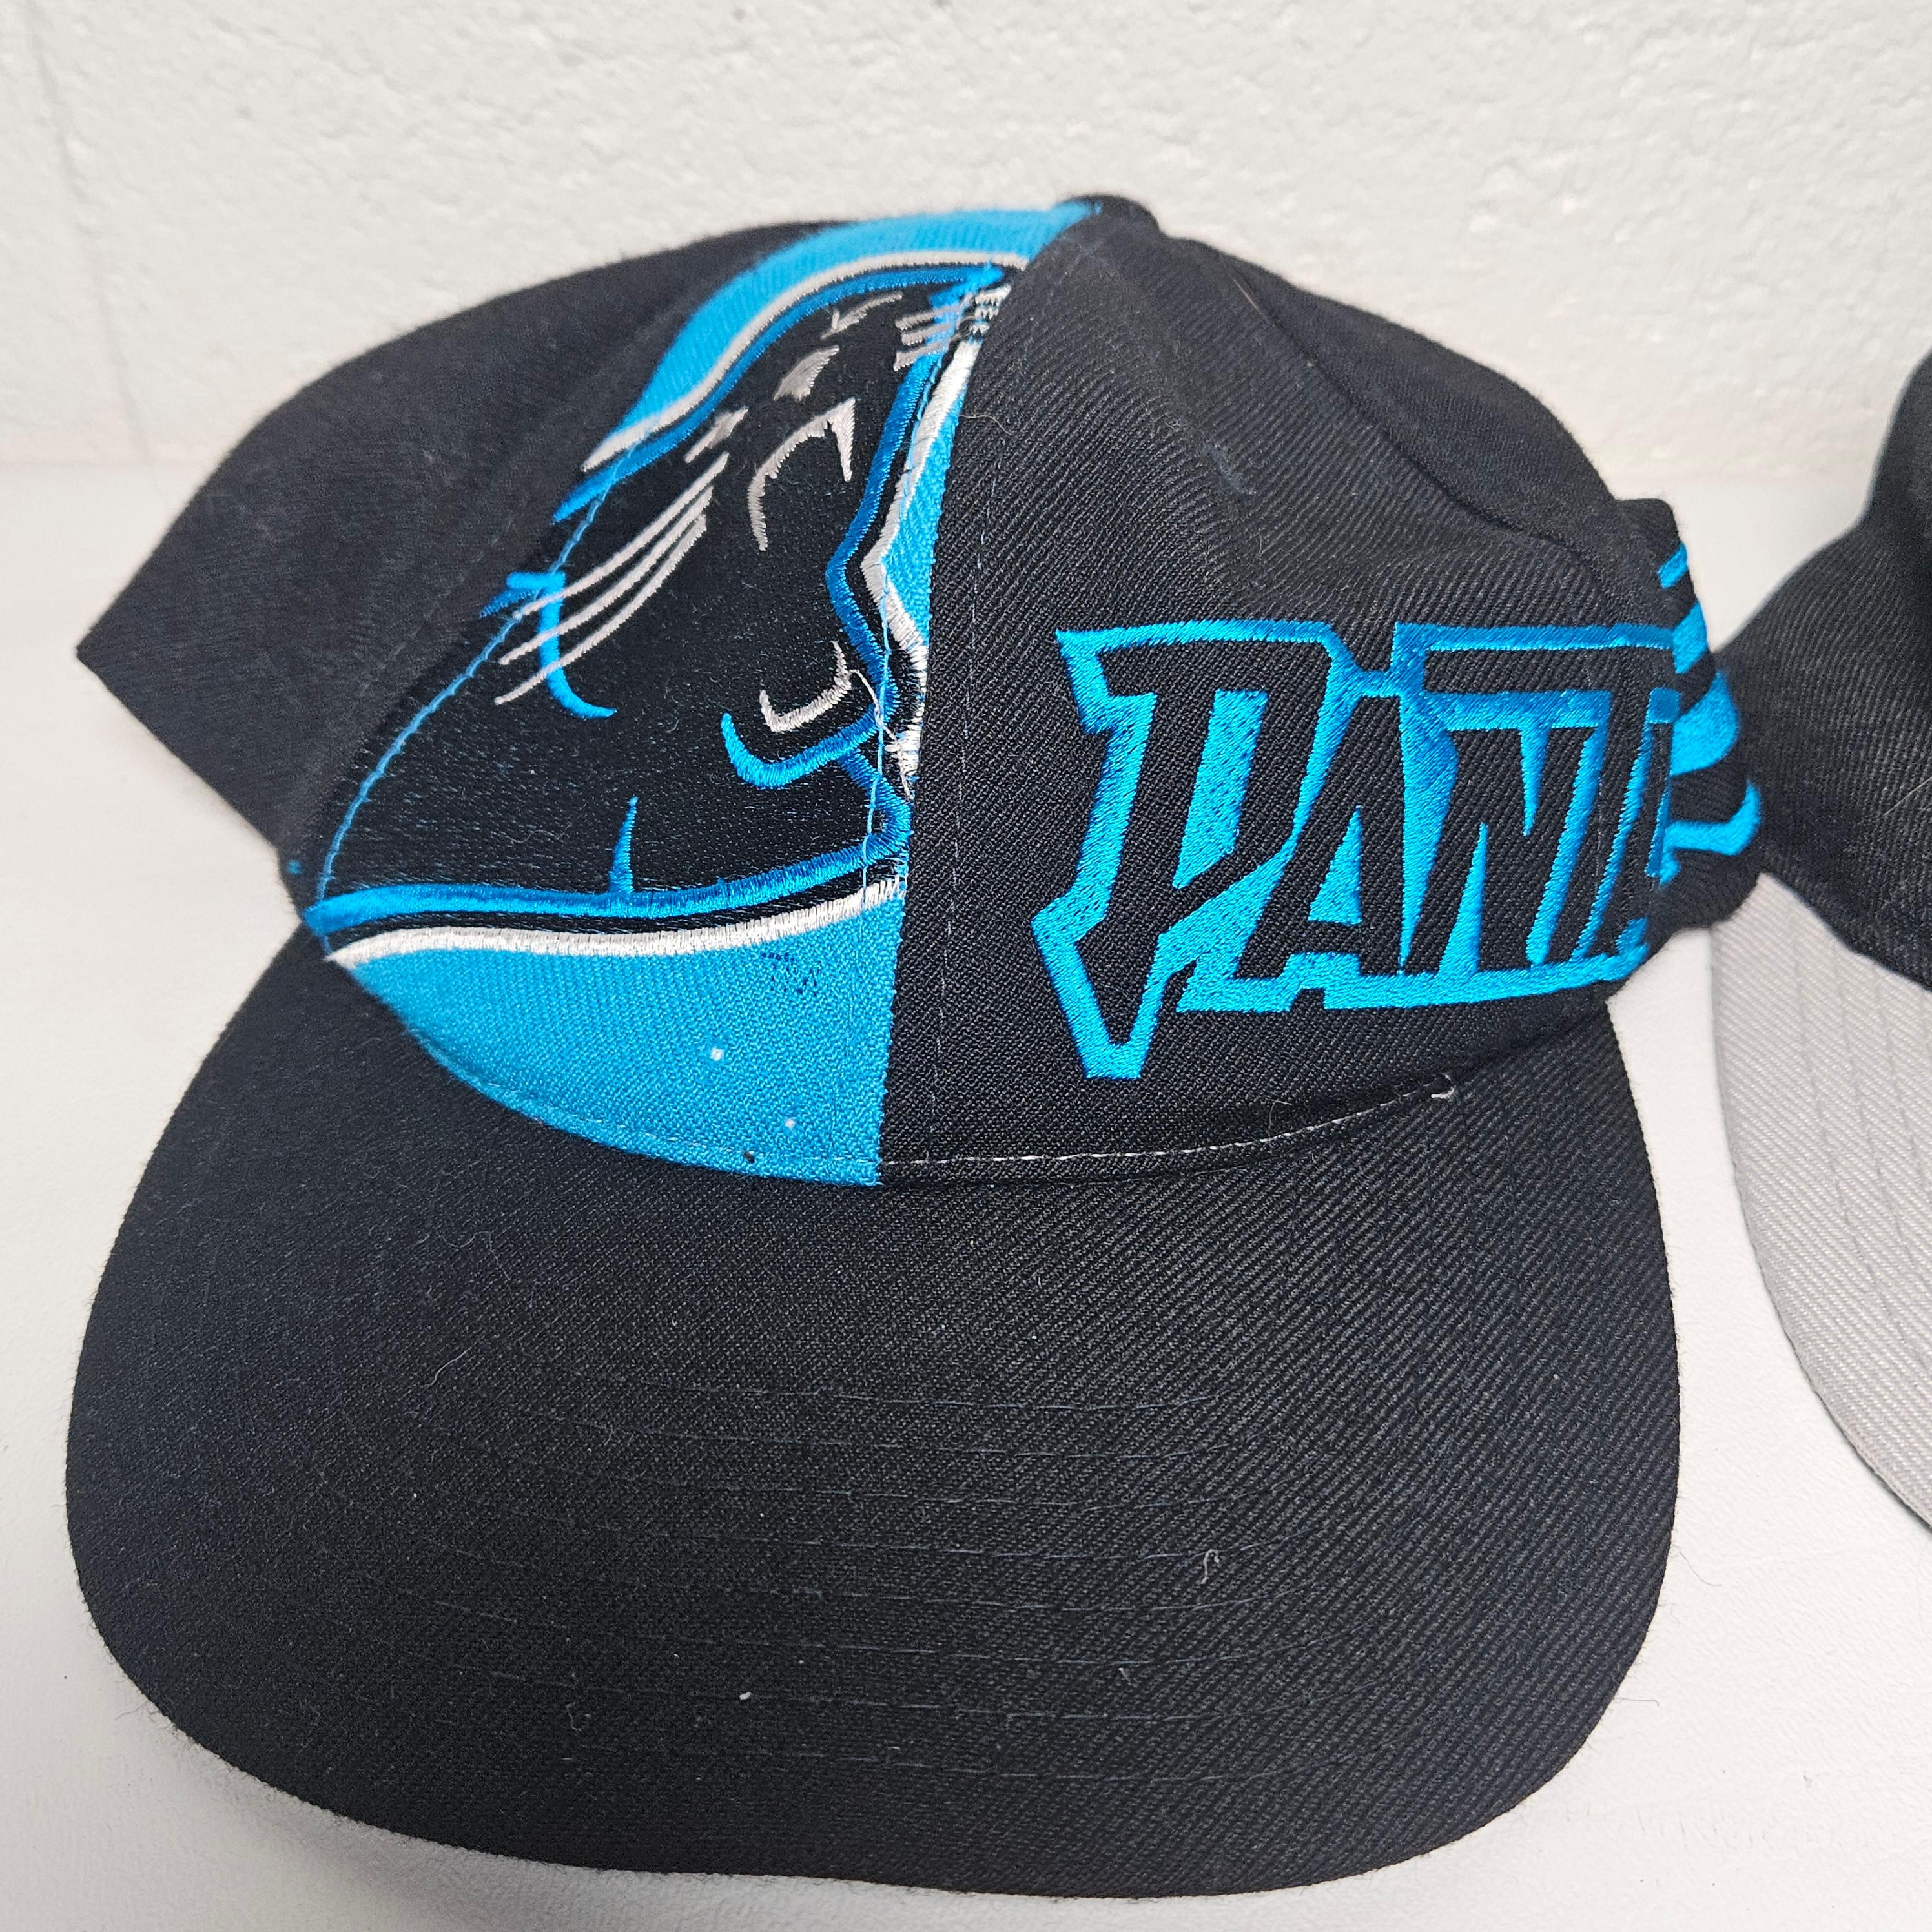 Lot of 2 Carolina Panthers Hats